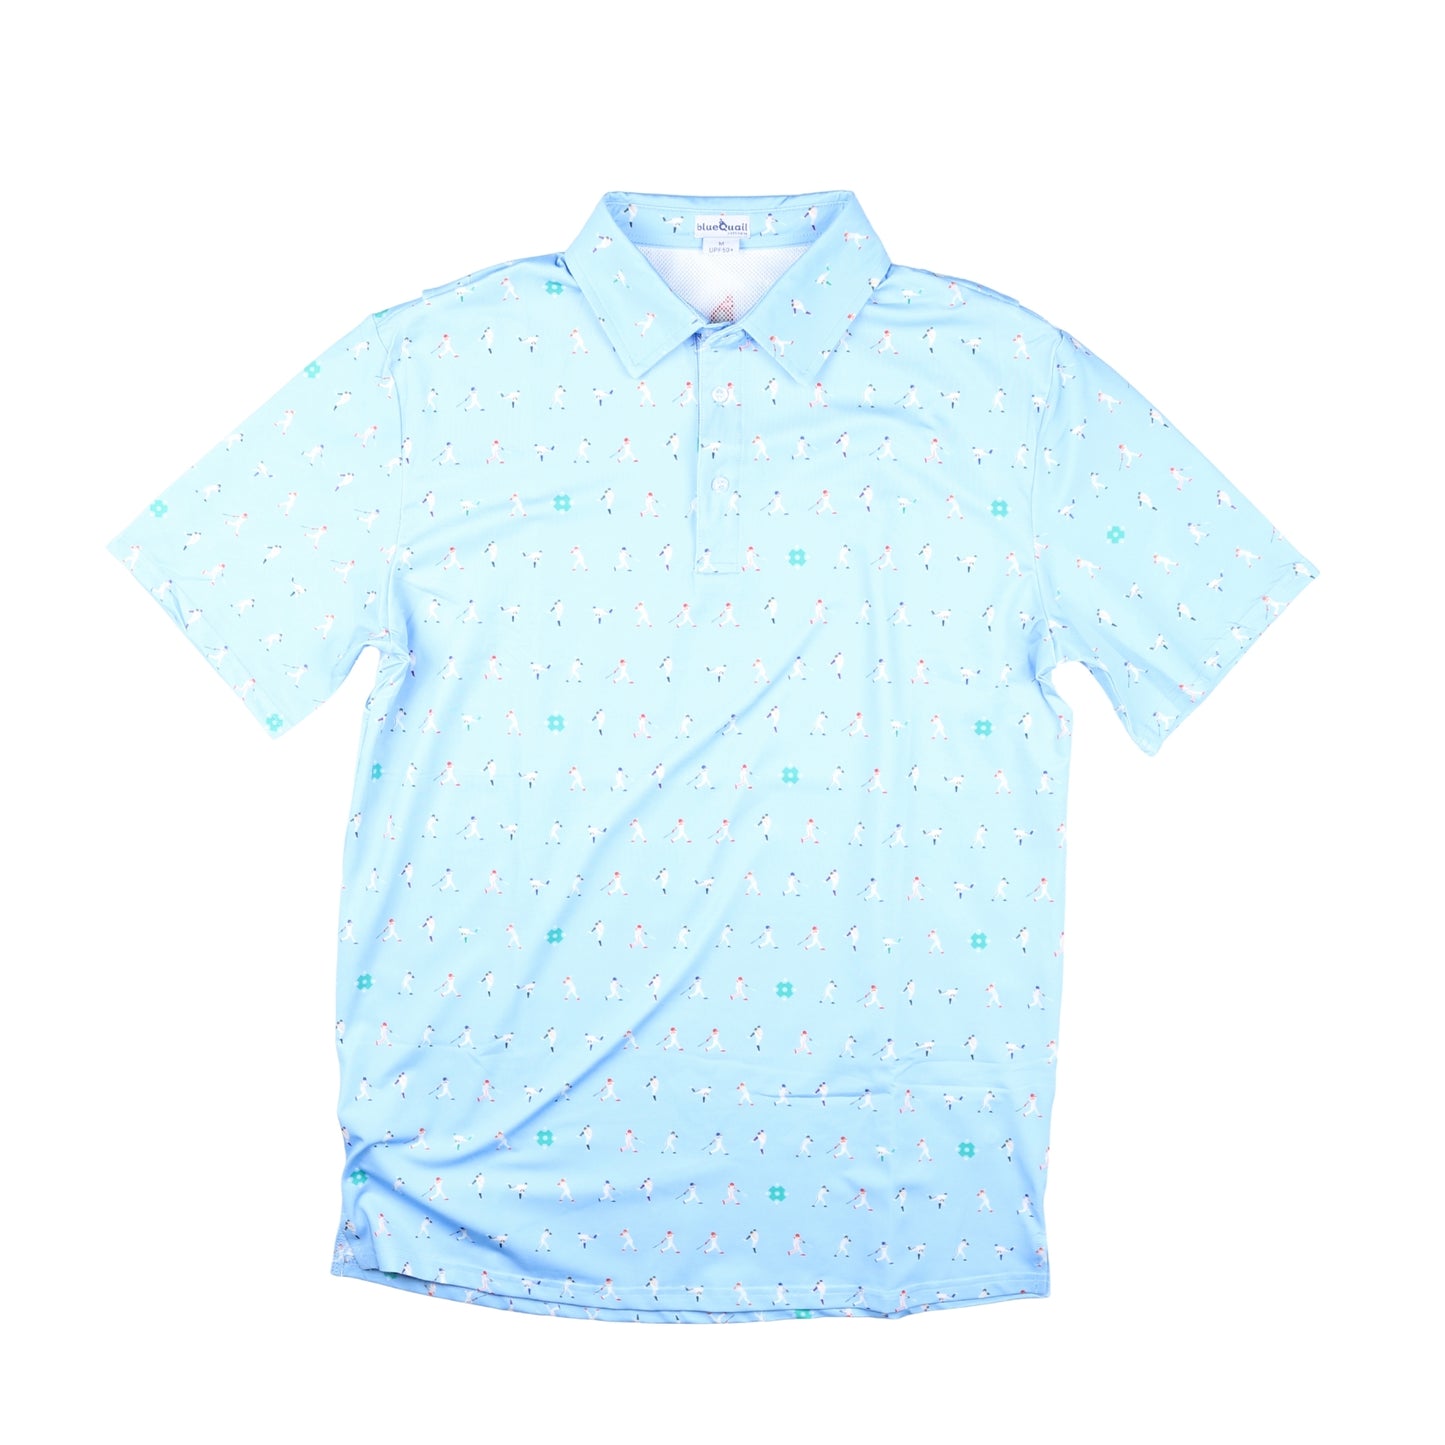 Men's - Batter Up Polo Short Sleeve Shirt